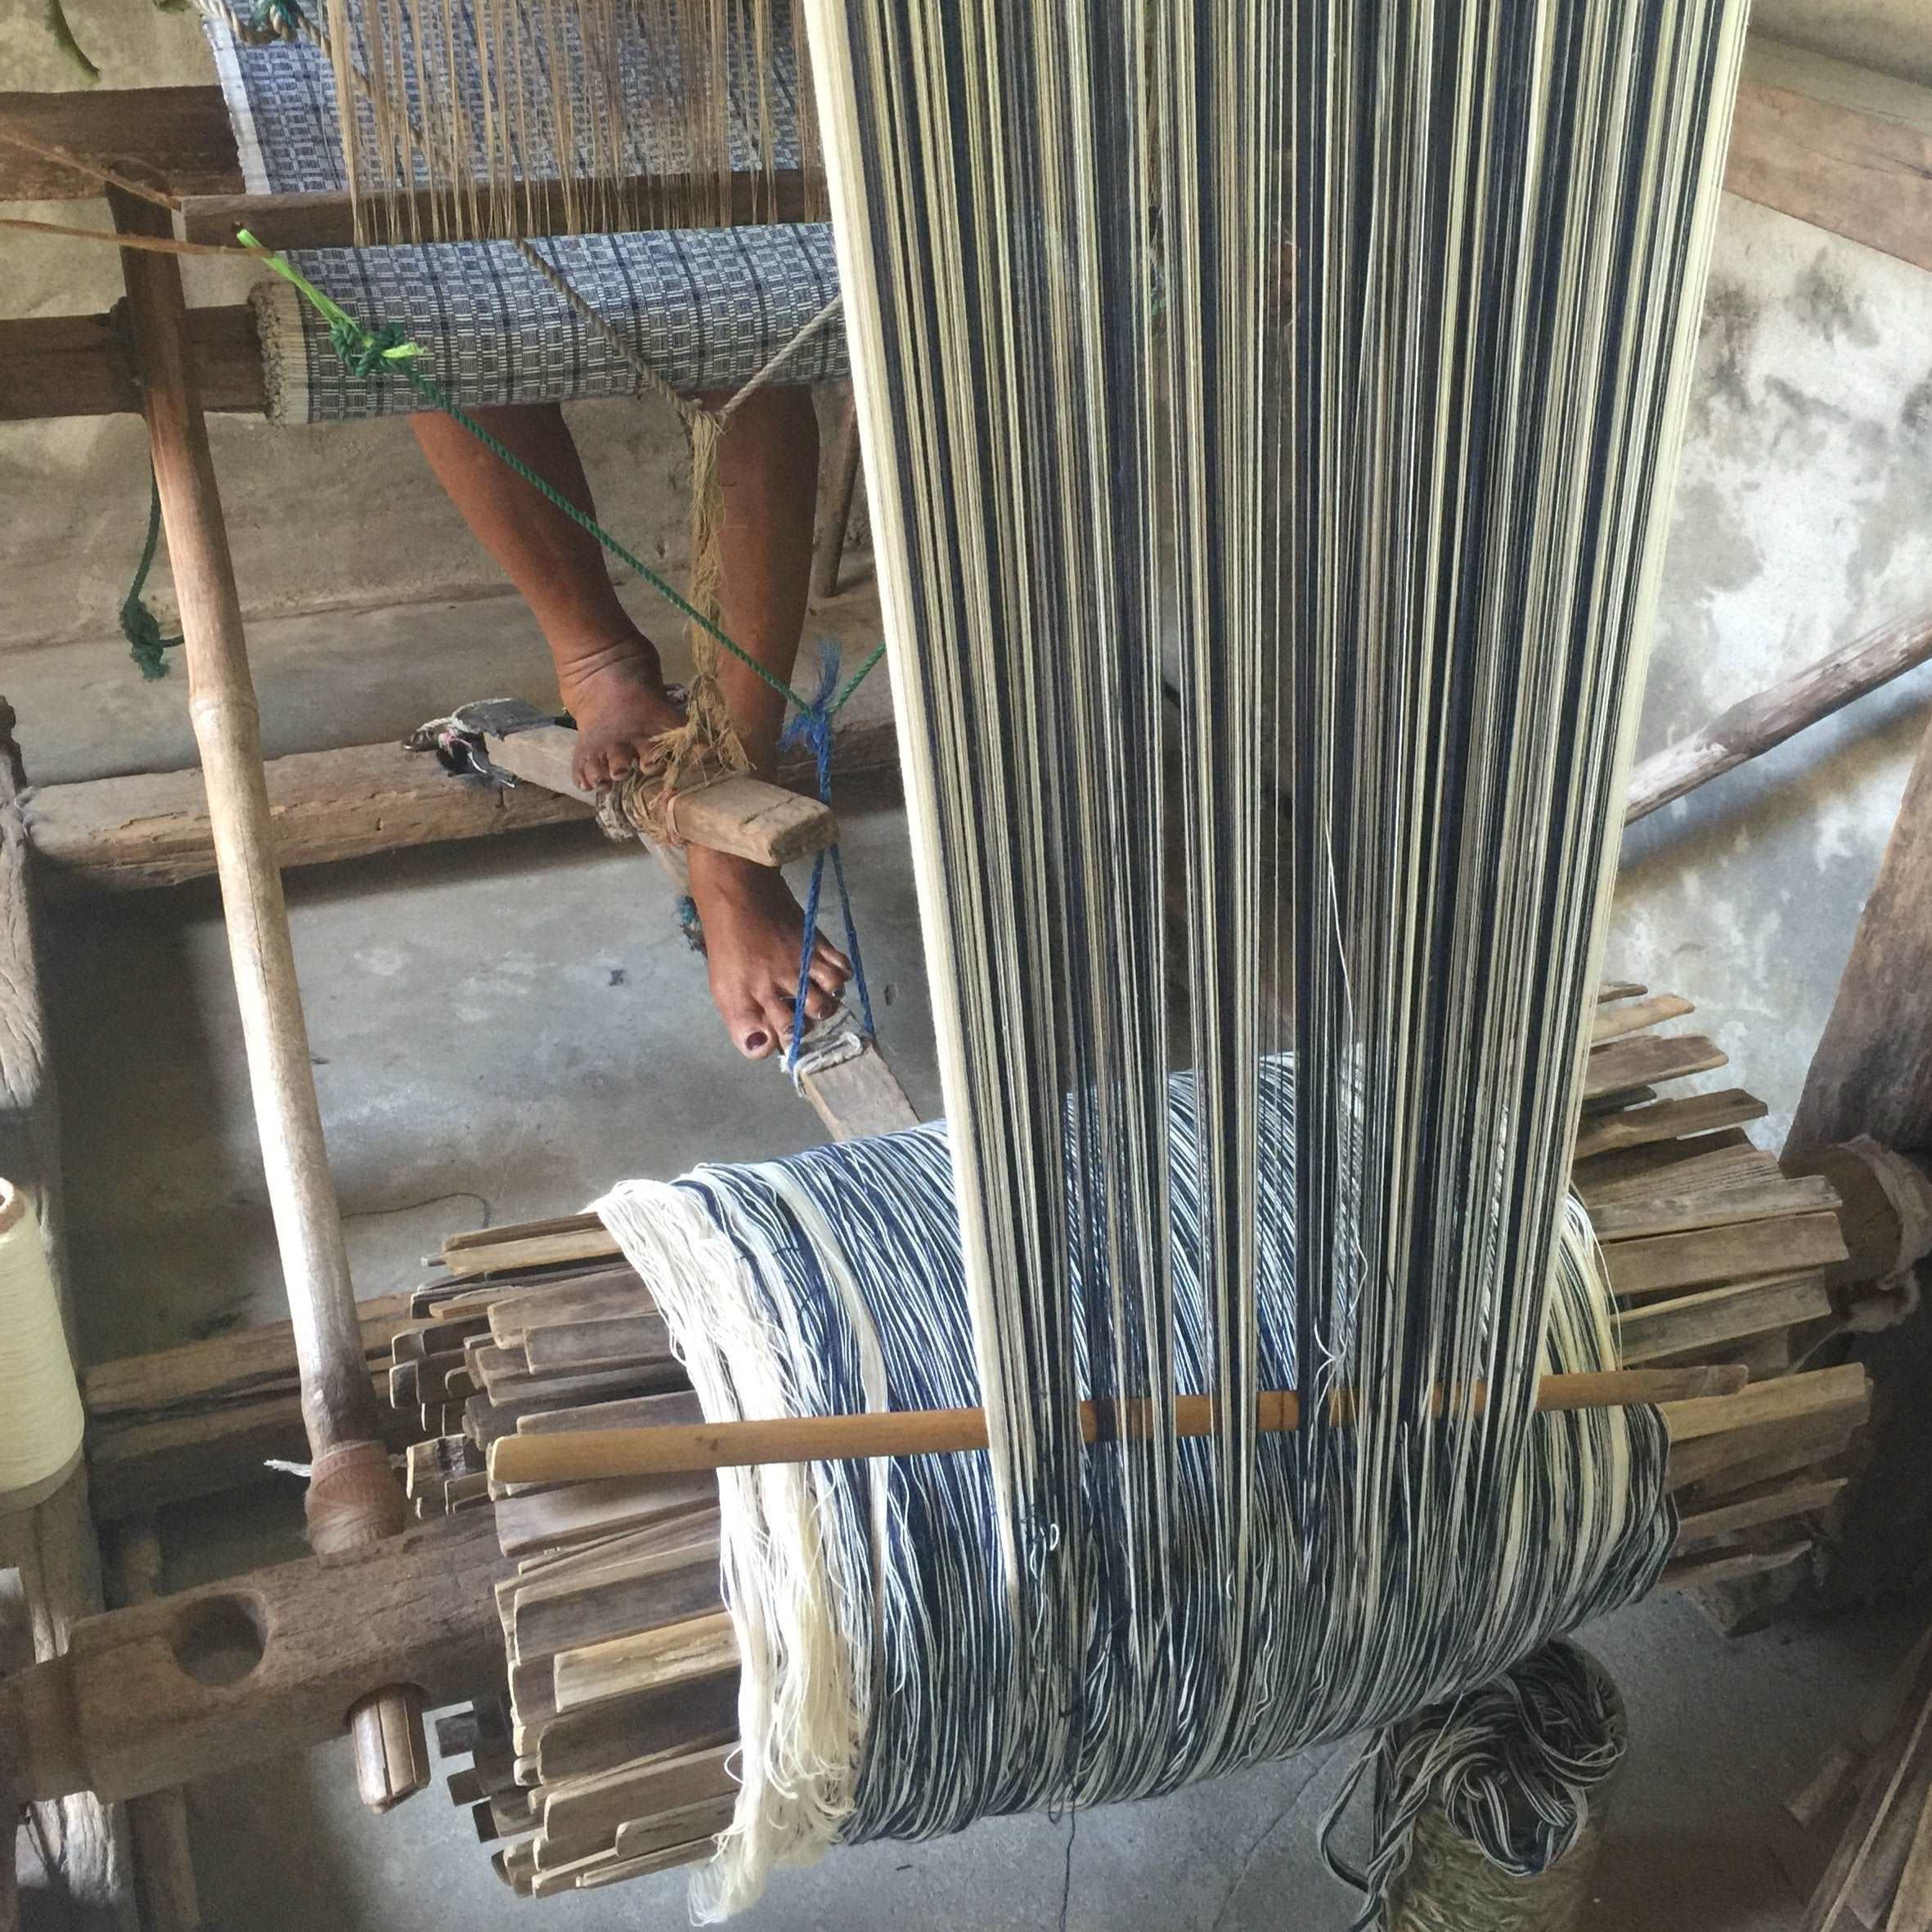 Weaving Binakol cloth in the Philippines